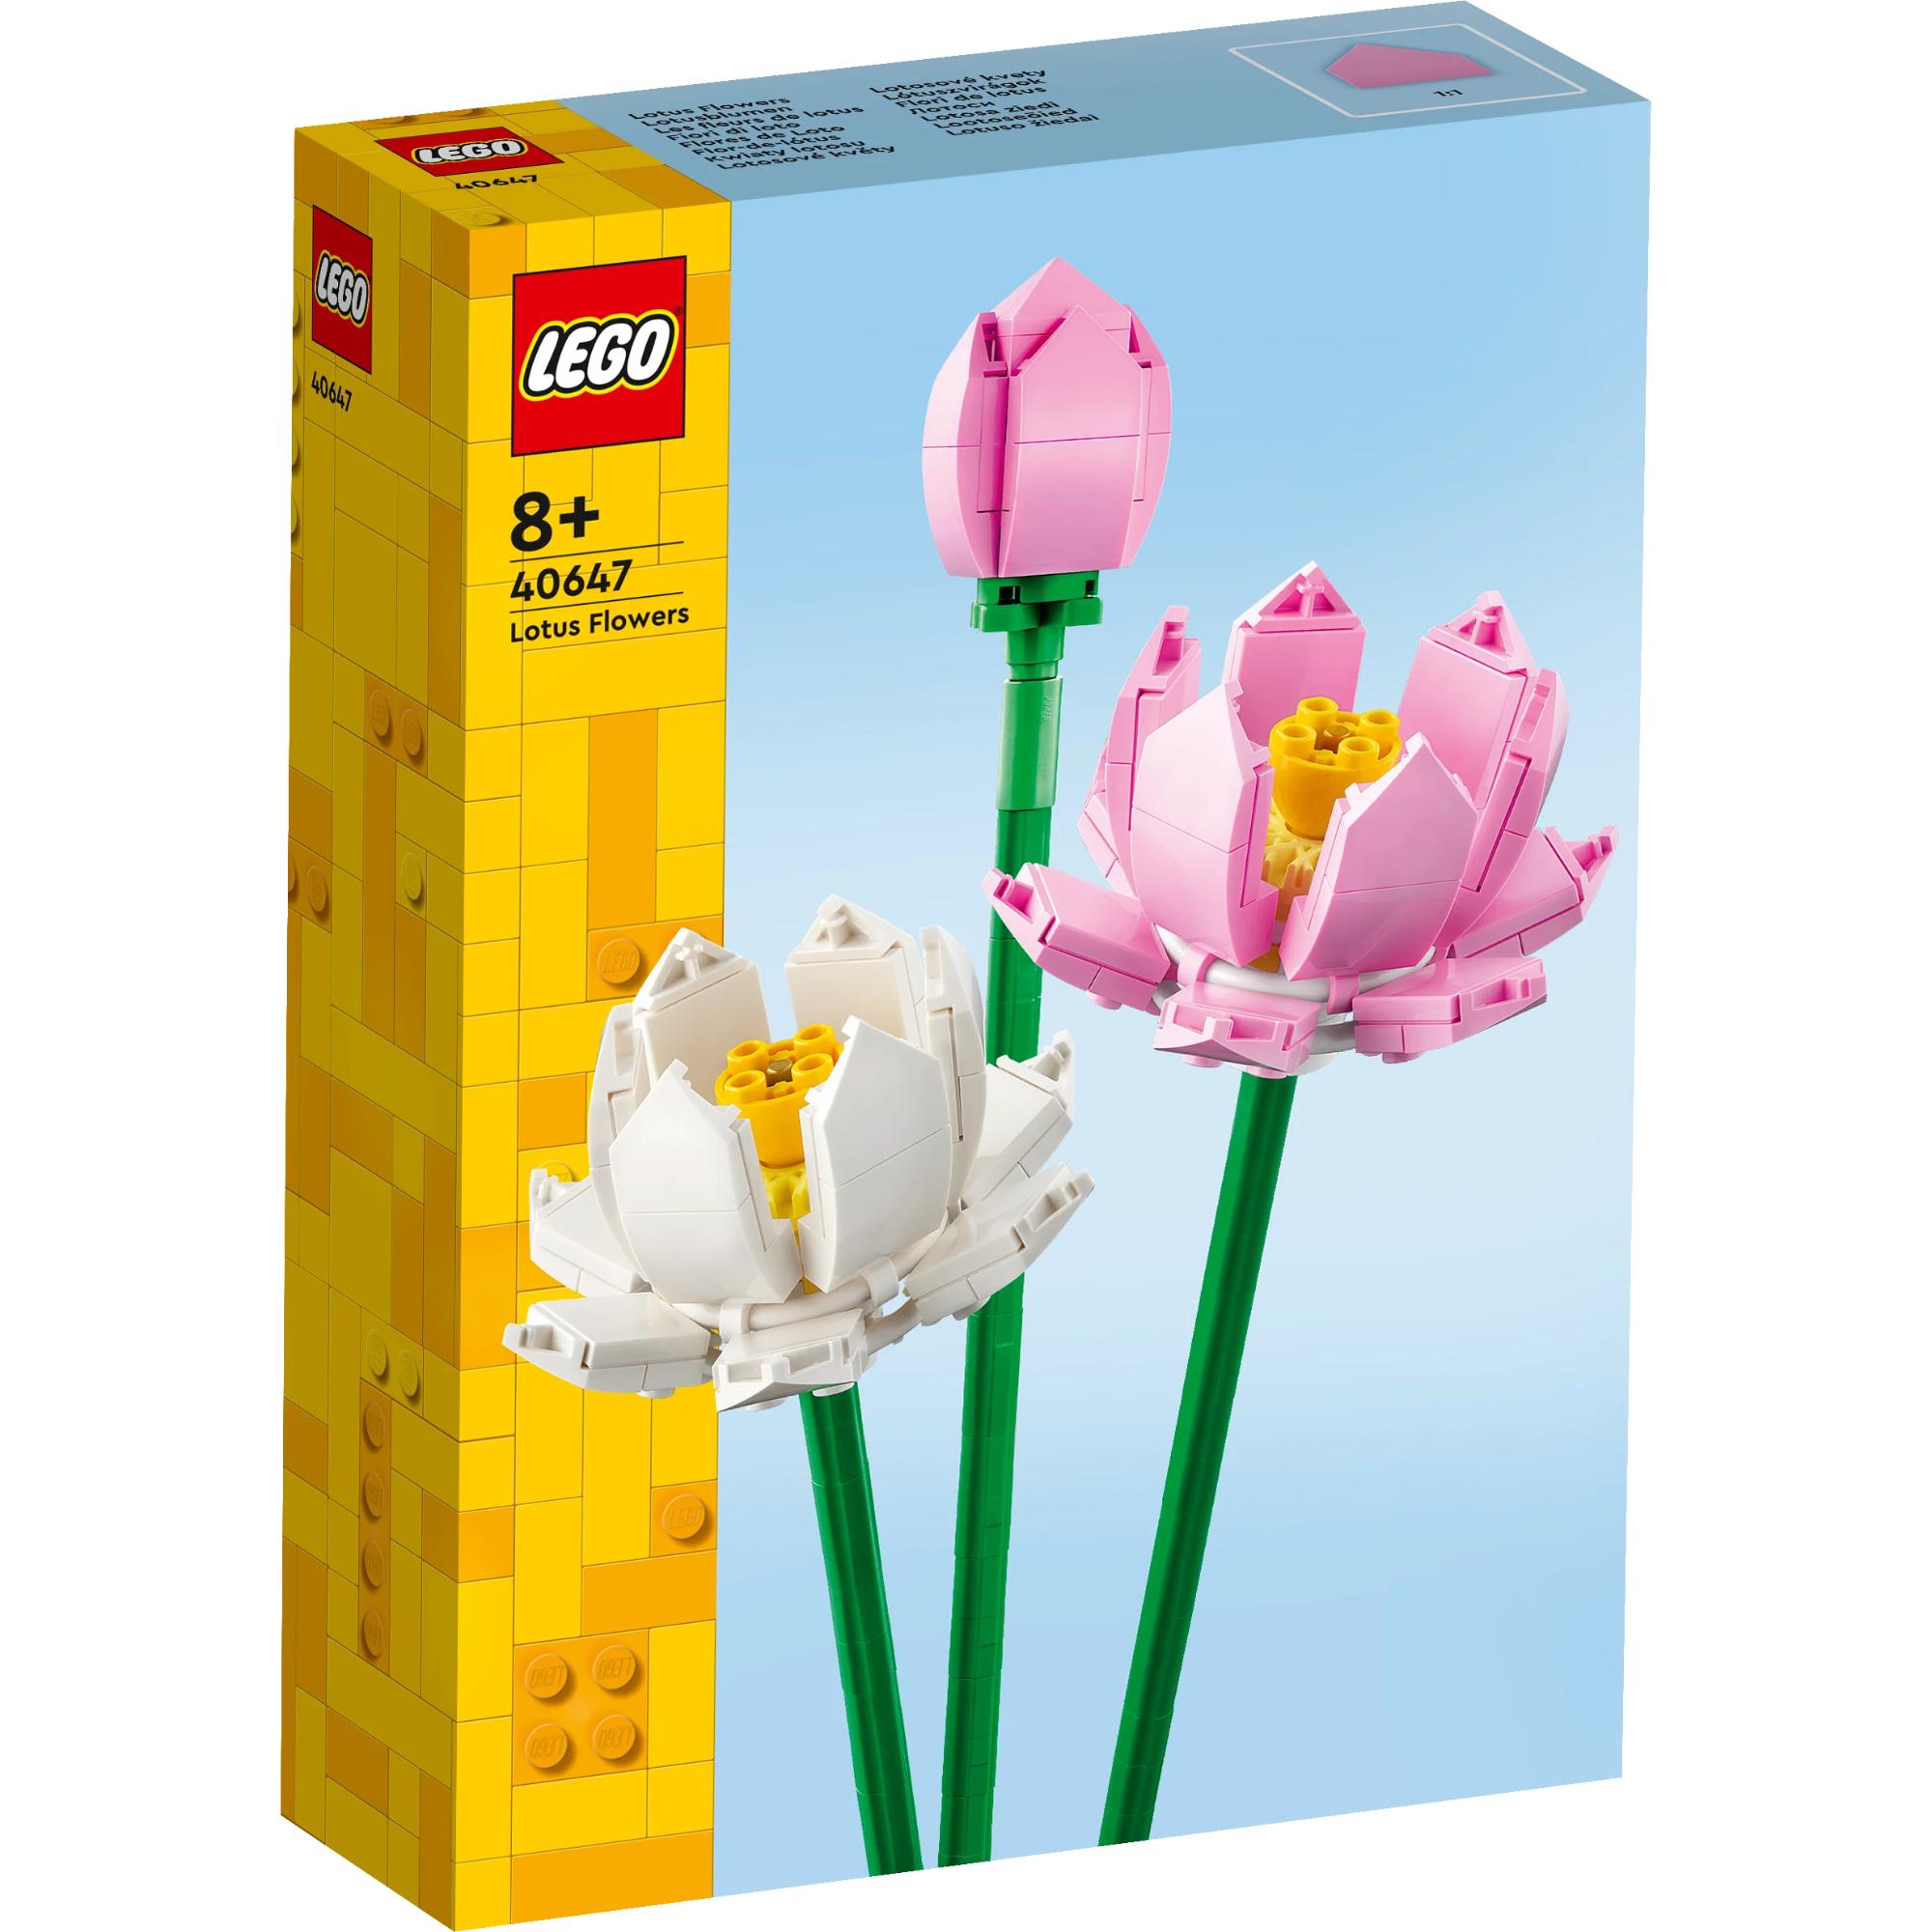 LEGO Iconic: Lotus Flowers (40647)